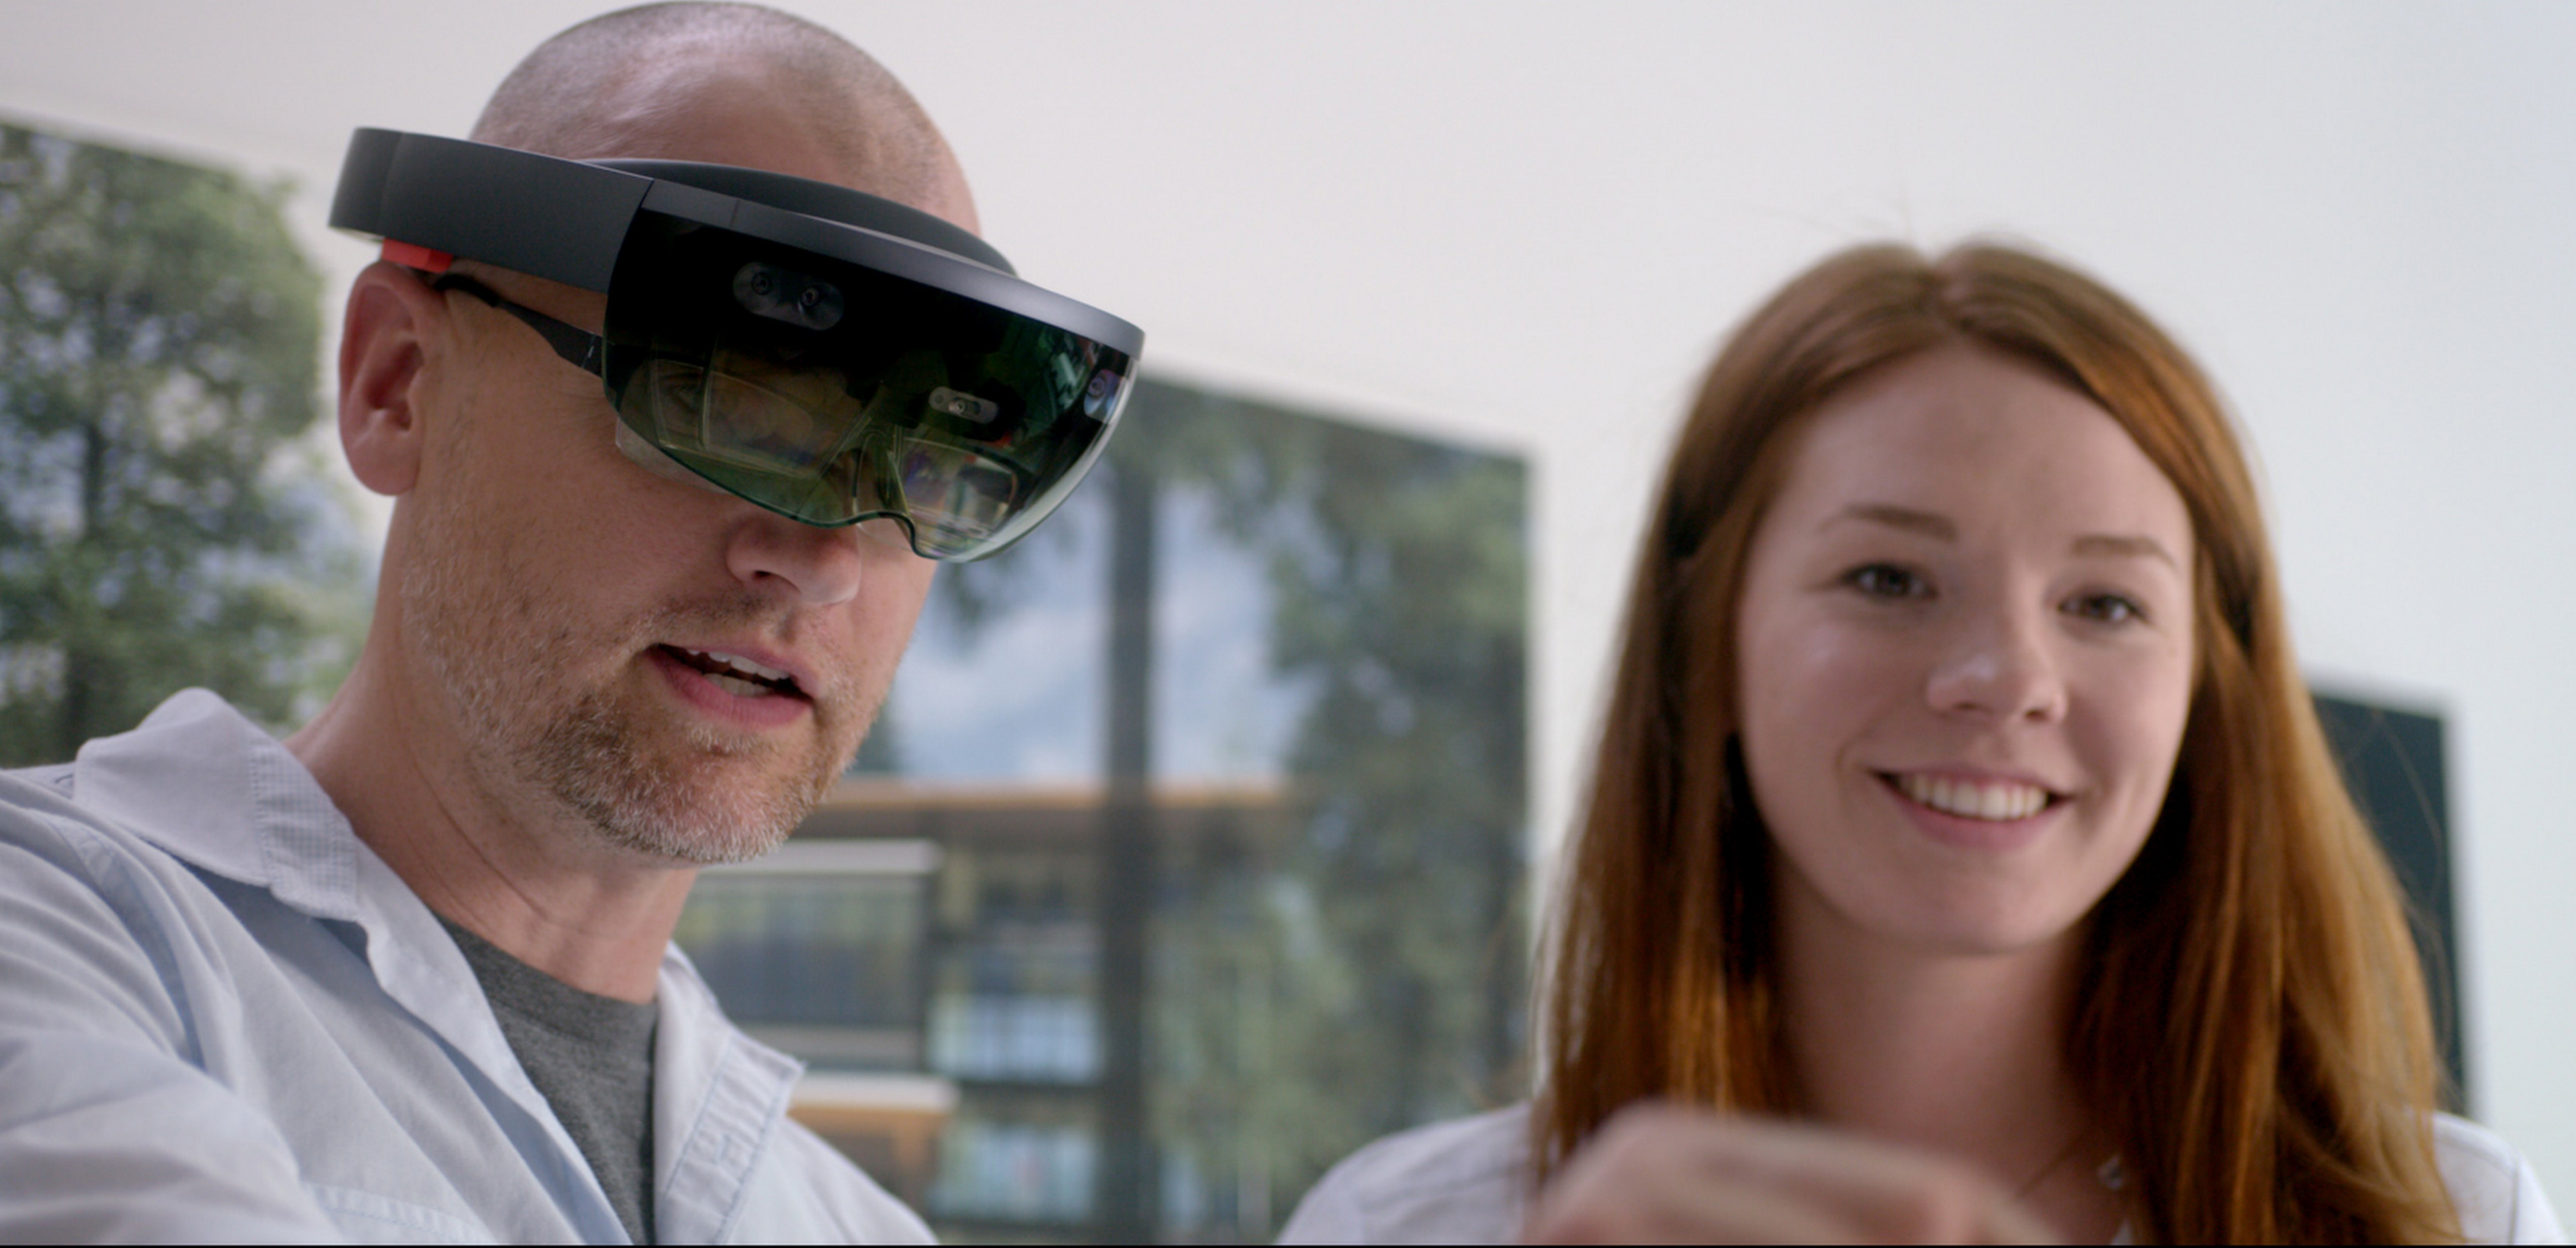 Man wearing Microsoft HoloLens standing next to woman.